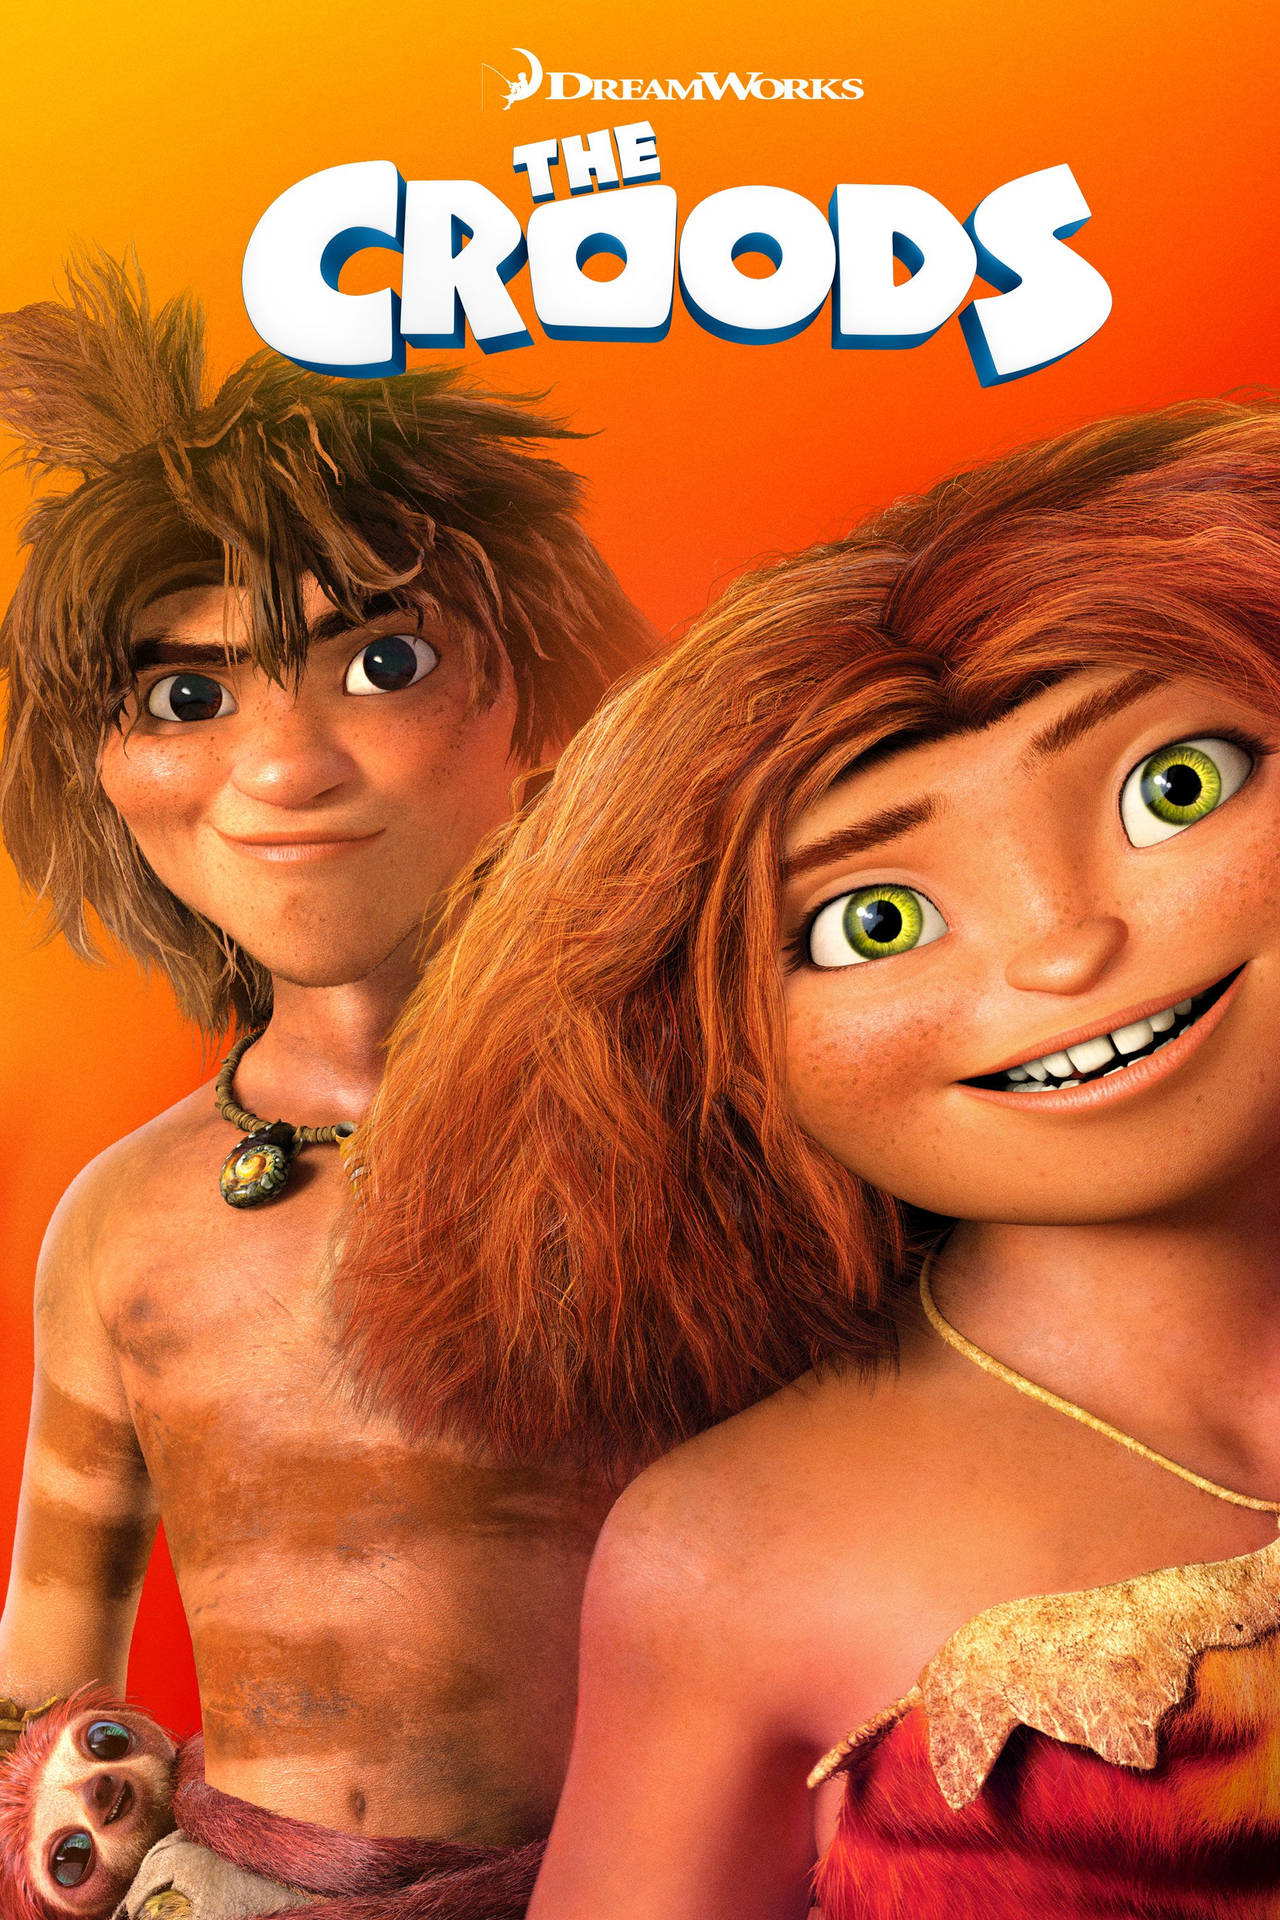 The Croods Orange Movie Poster Wallpaper